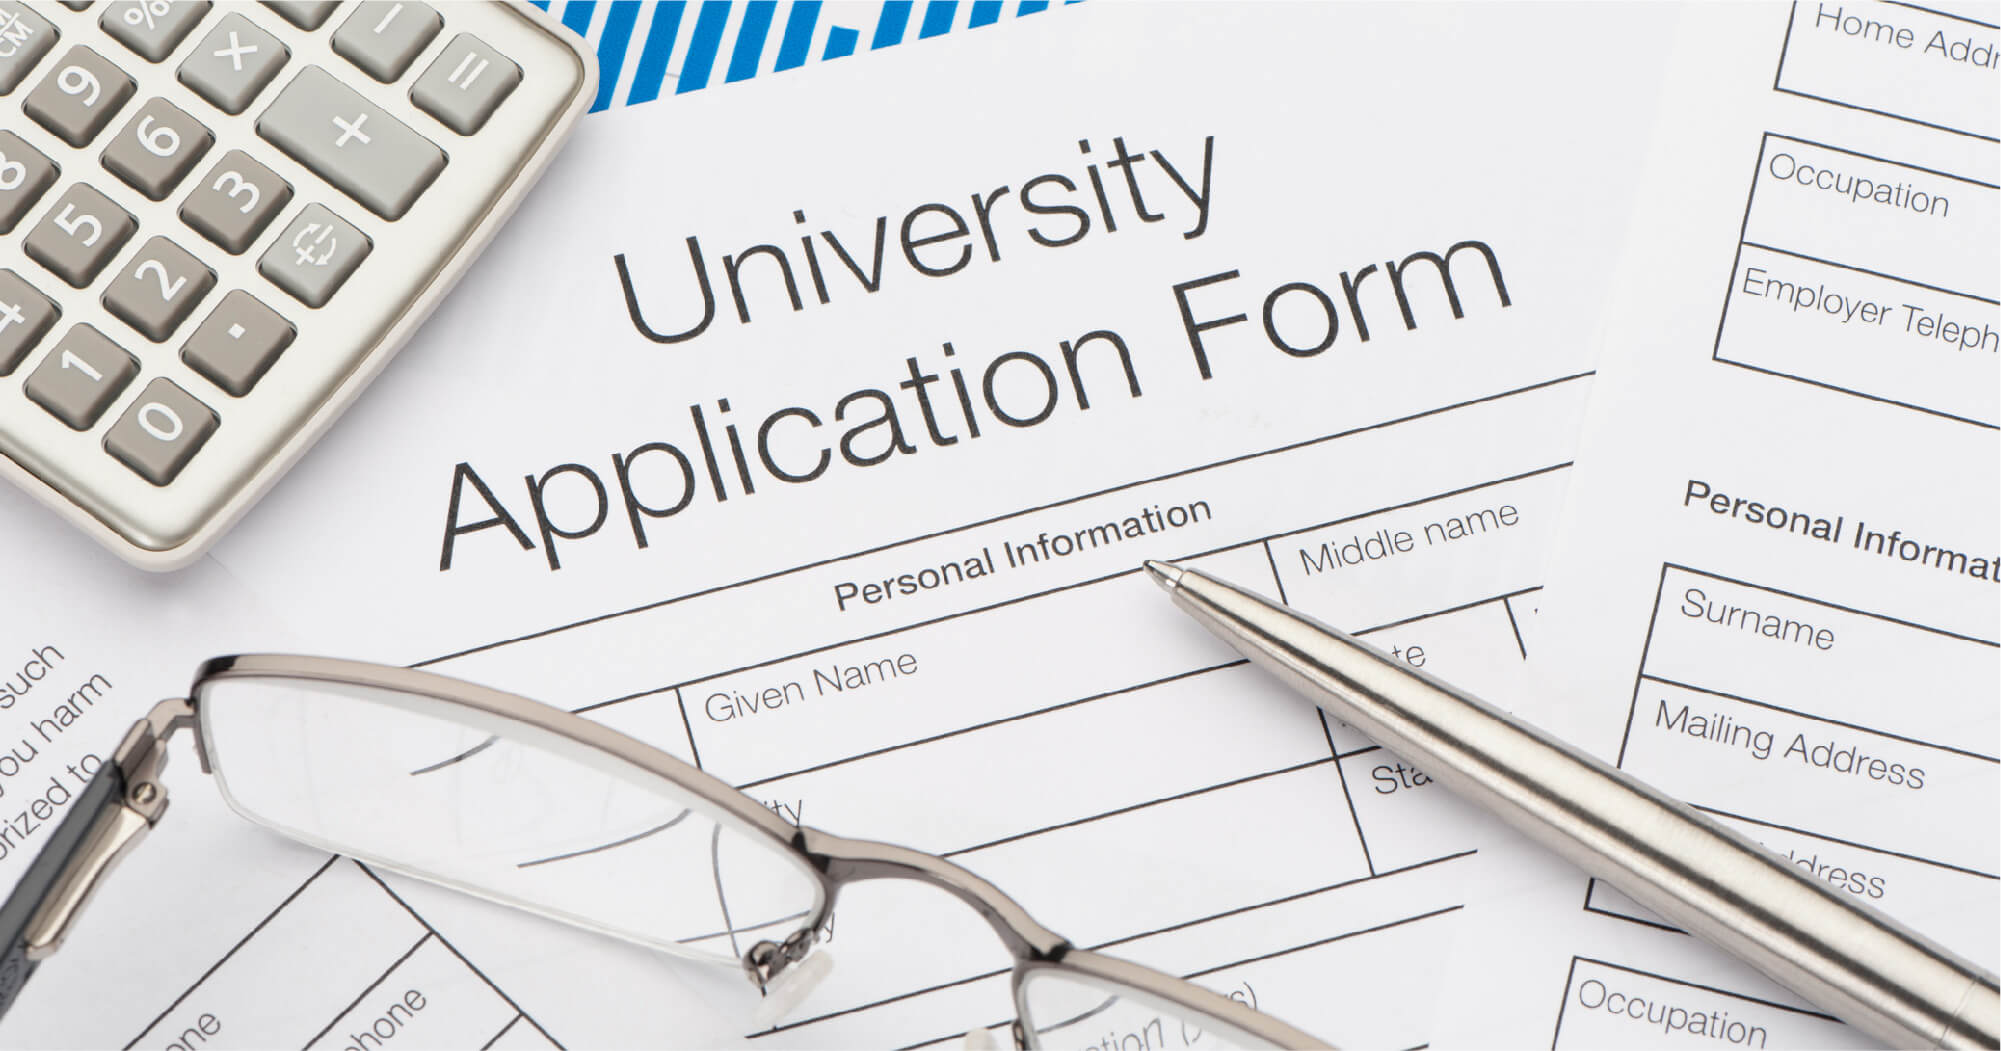 further education application form - SingSaver